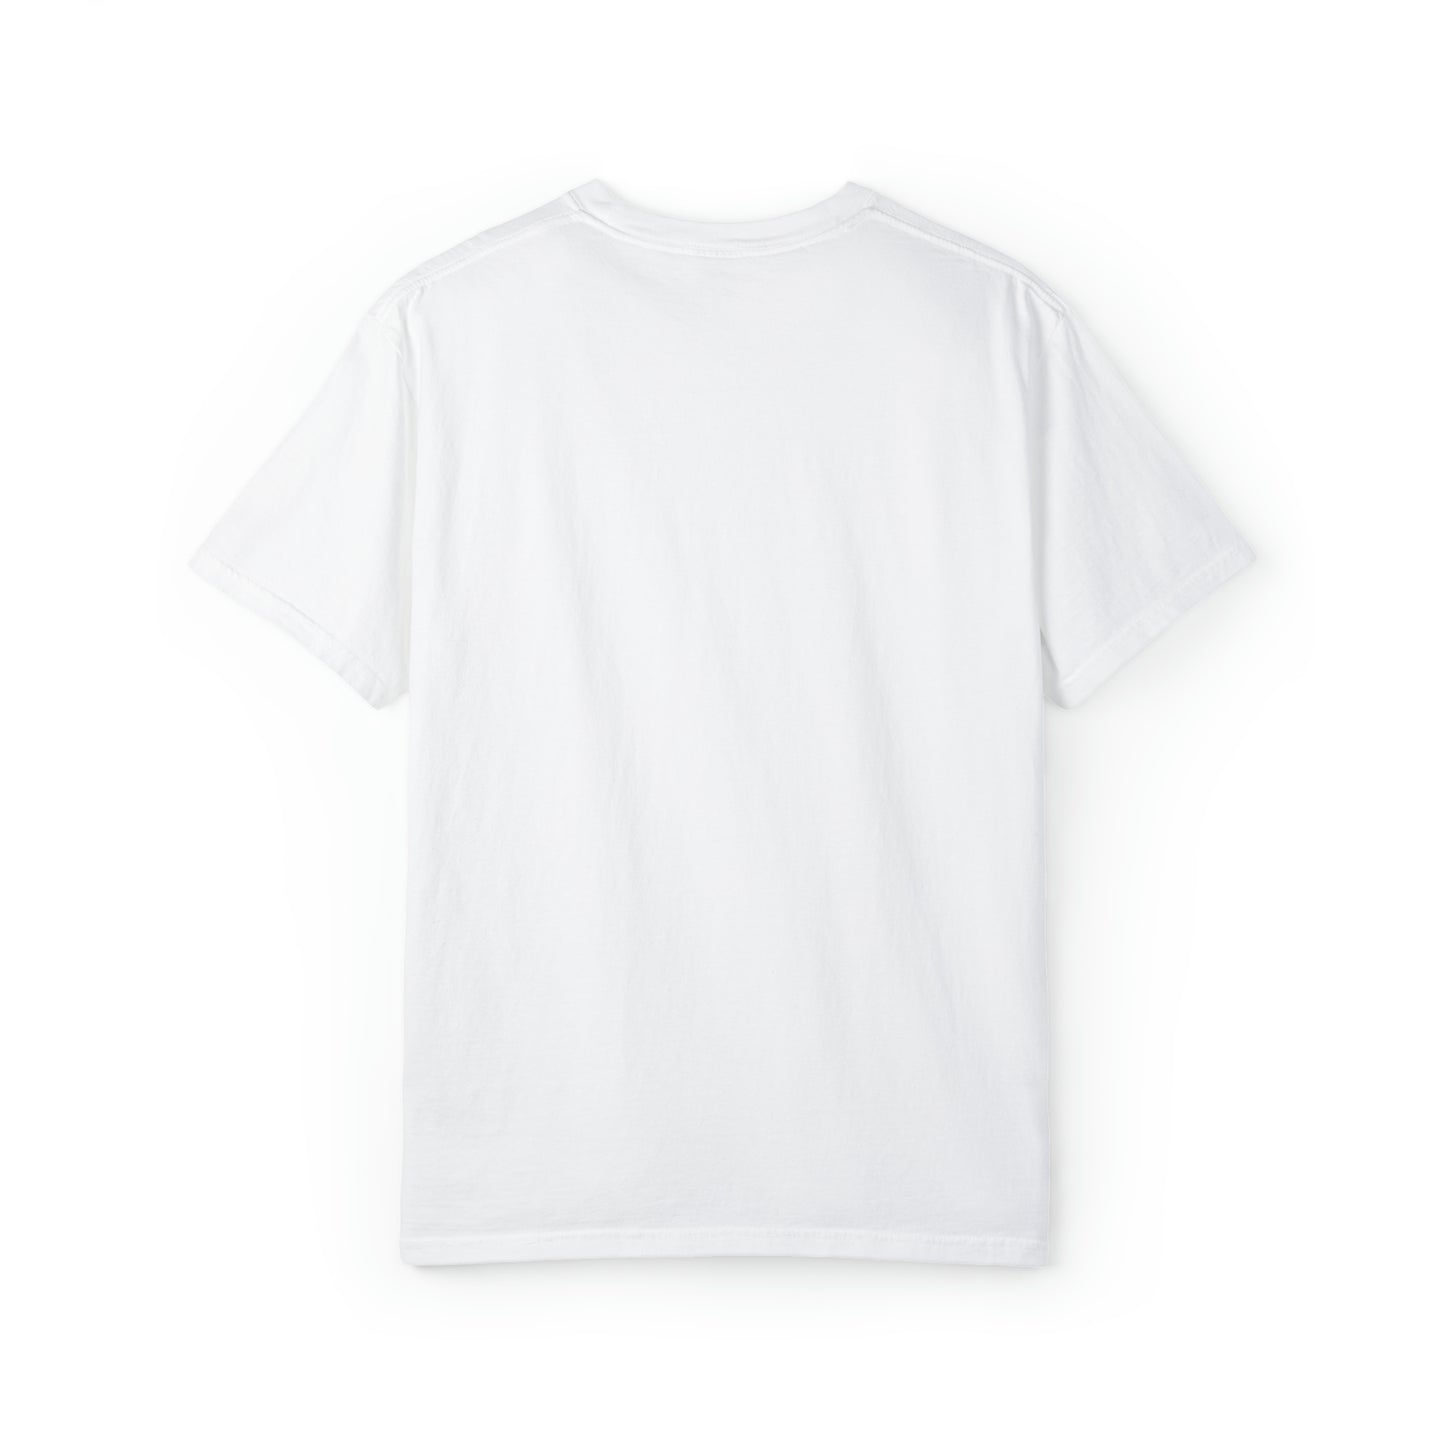 CantGetRite - Unisex Garment-Dyed T-shirt